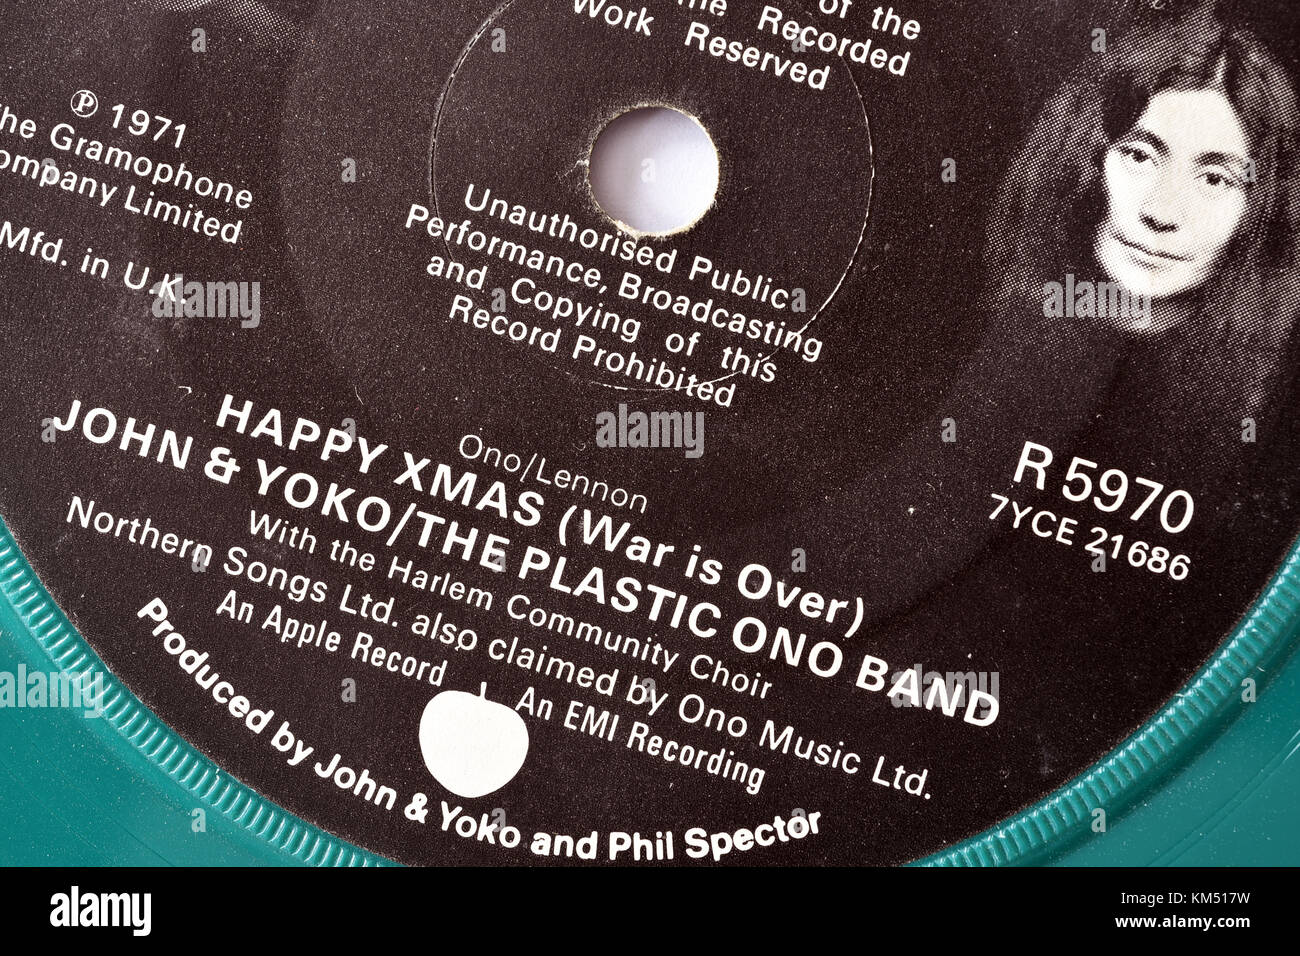 John & Yoko Plastic Ono Band Happy Xmas War is Over seven inch single Stock Photo